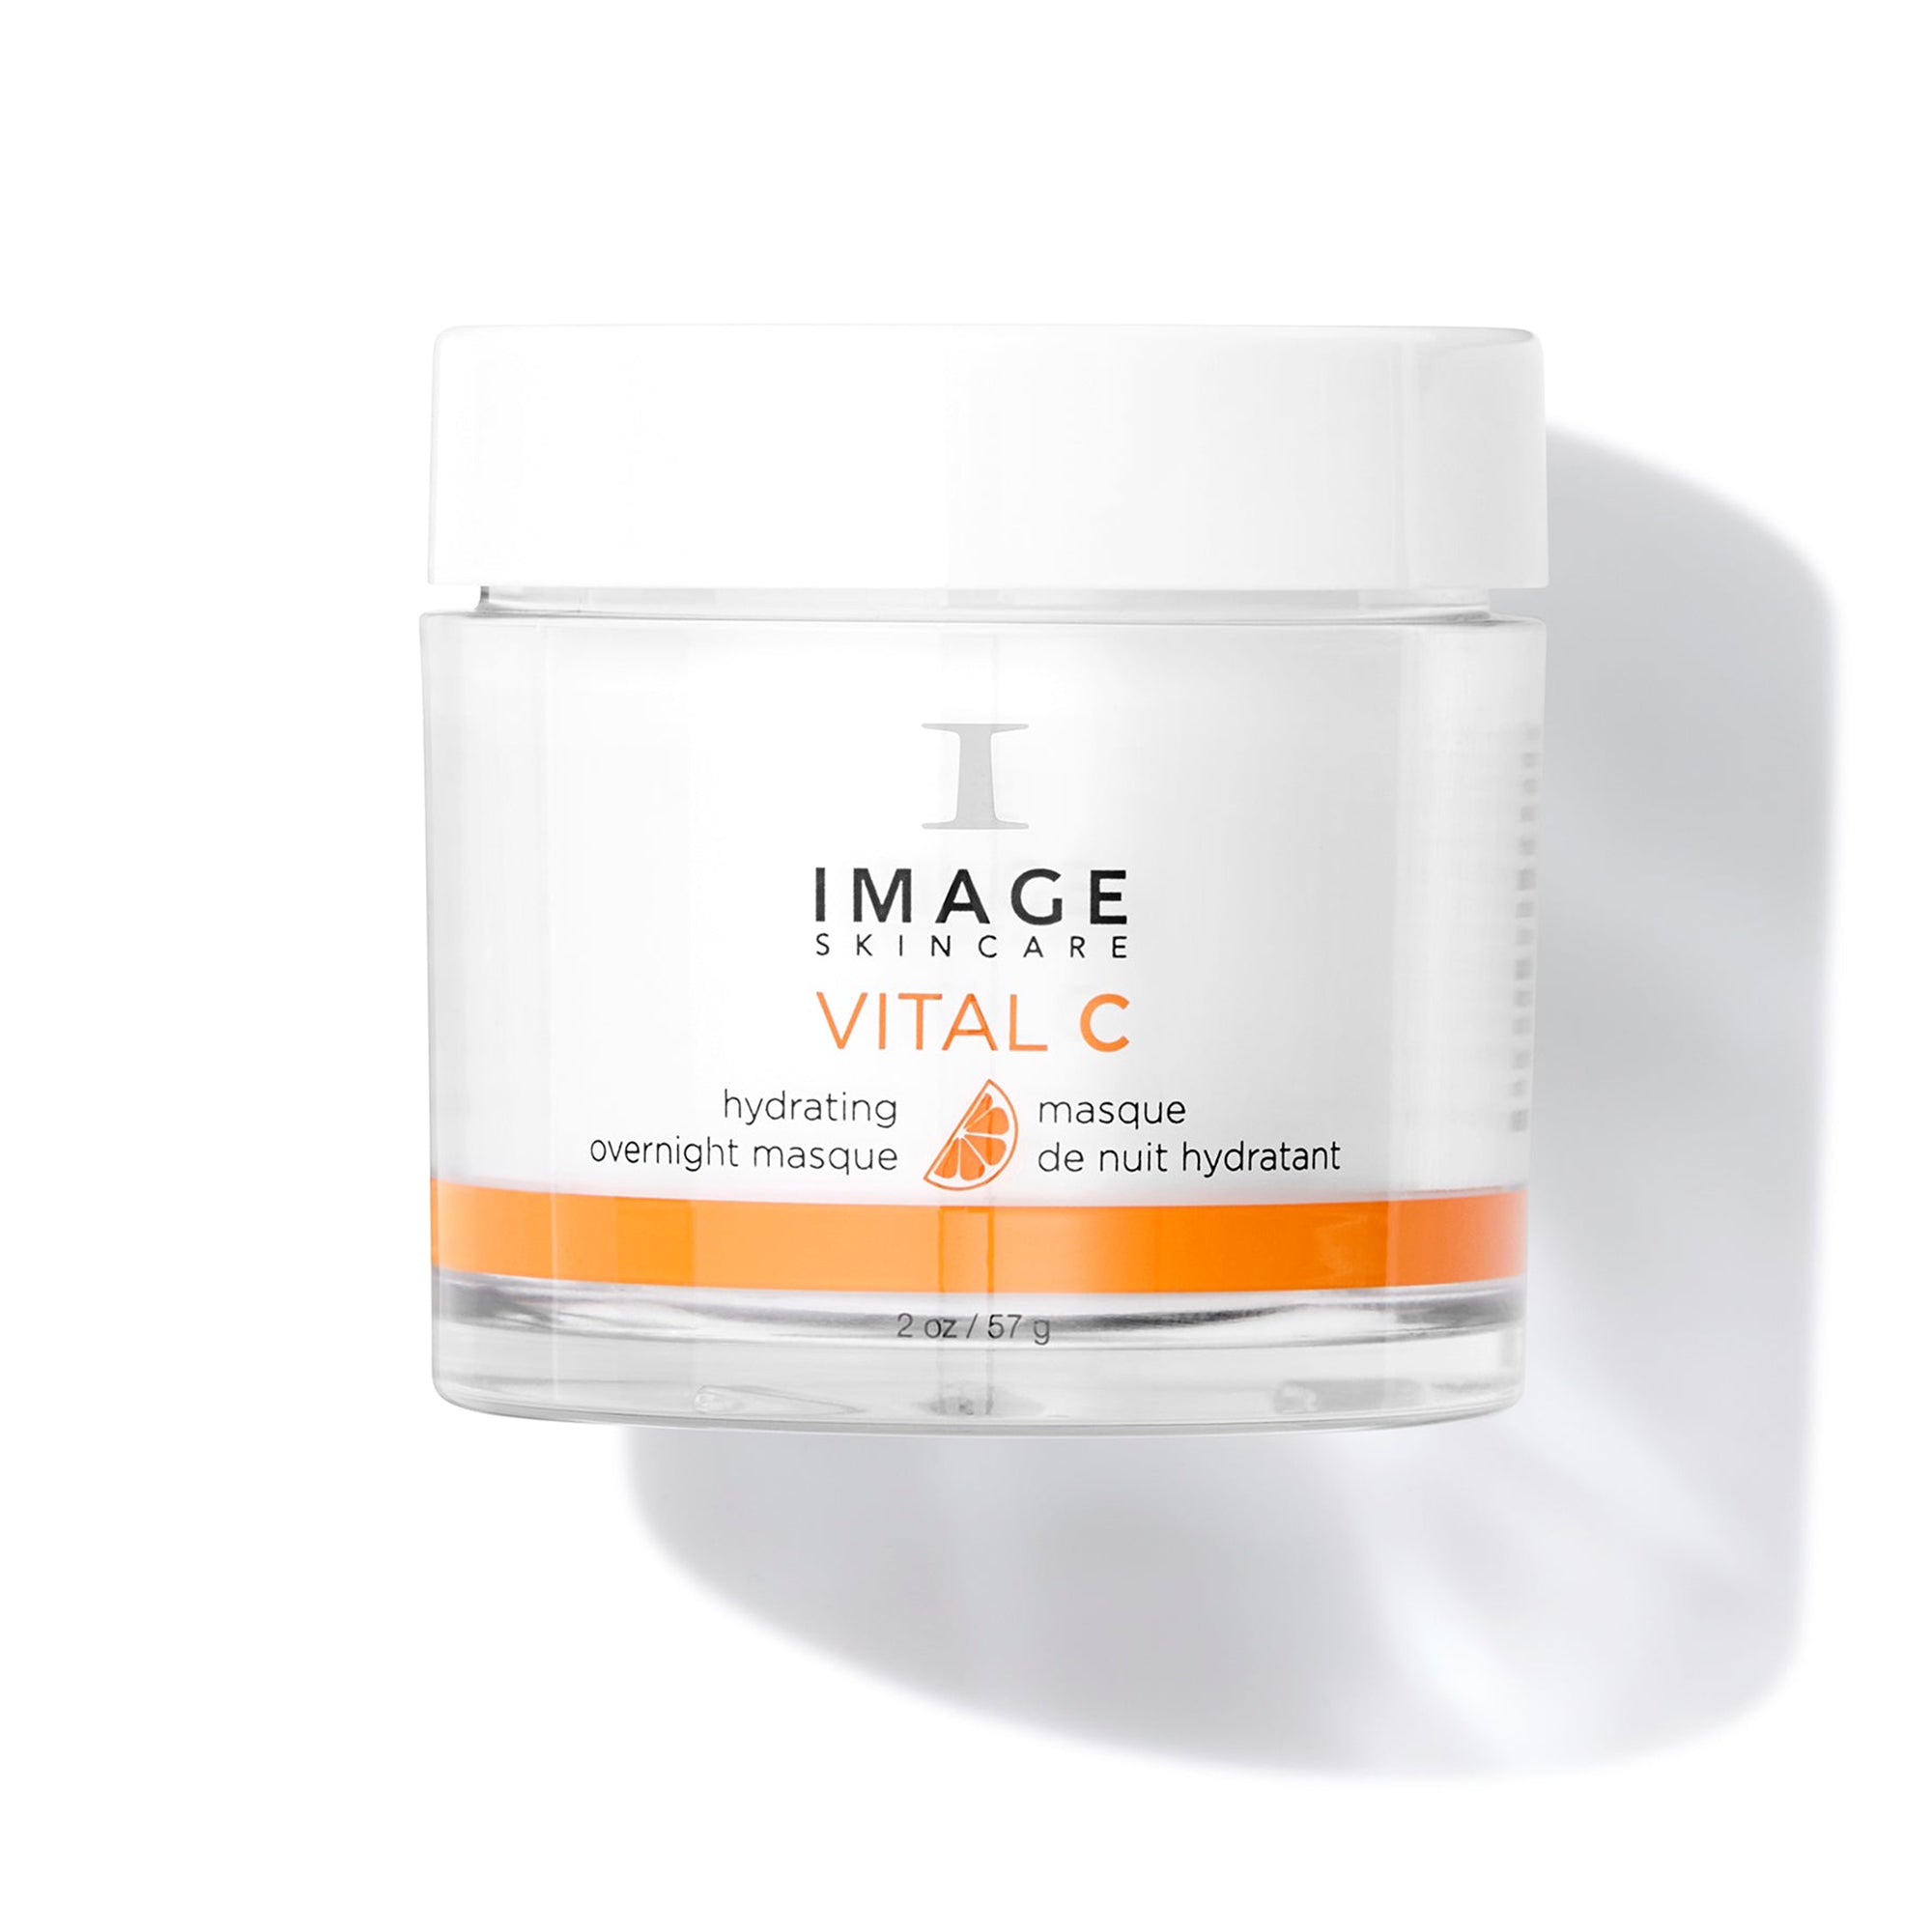 Image Skincare Vital C Hydrating Overnight Masque / 2OZ